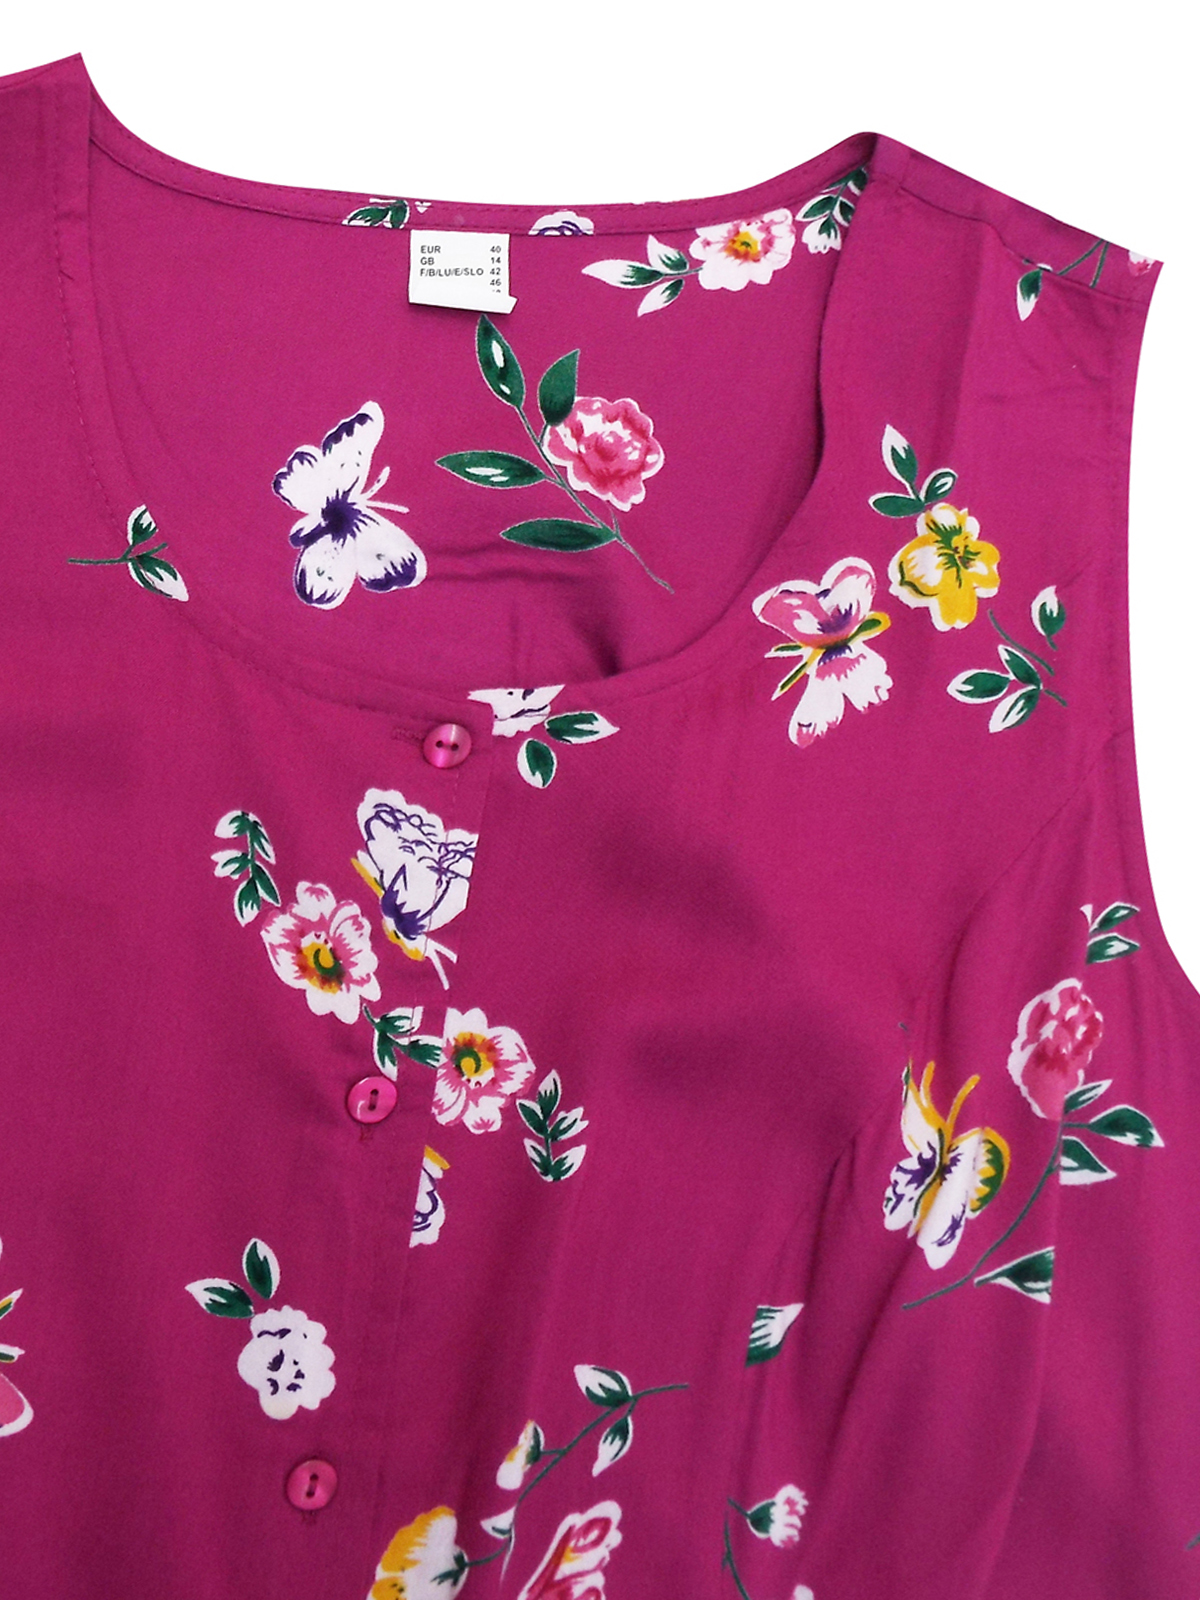 MAGENTA Floral Print Button Through Shirt Dress - Plus Size 14 to 30 ...